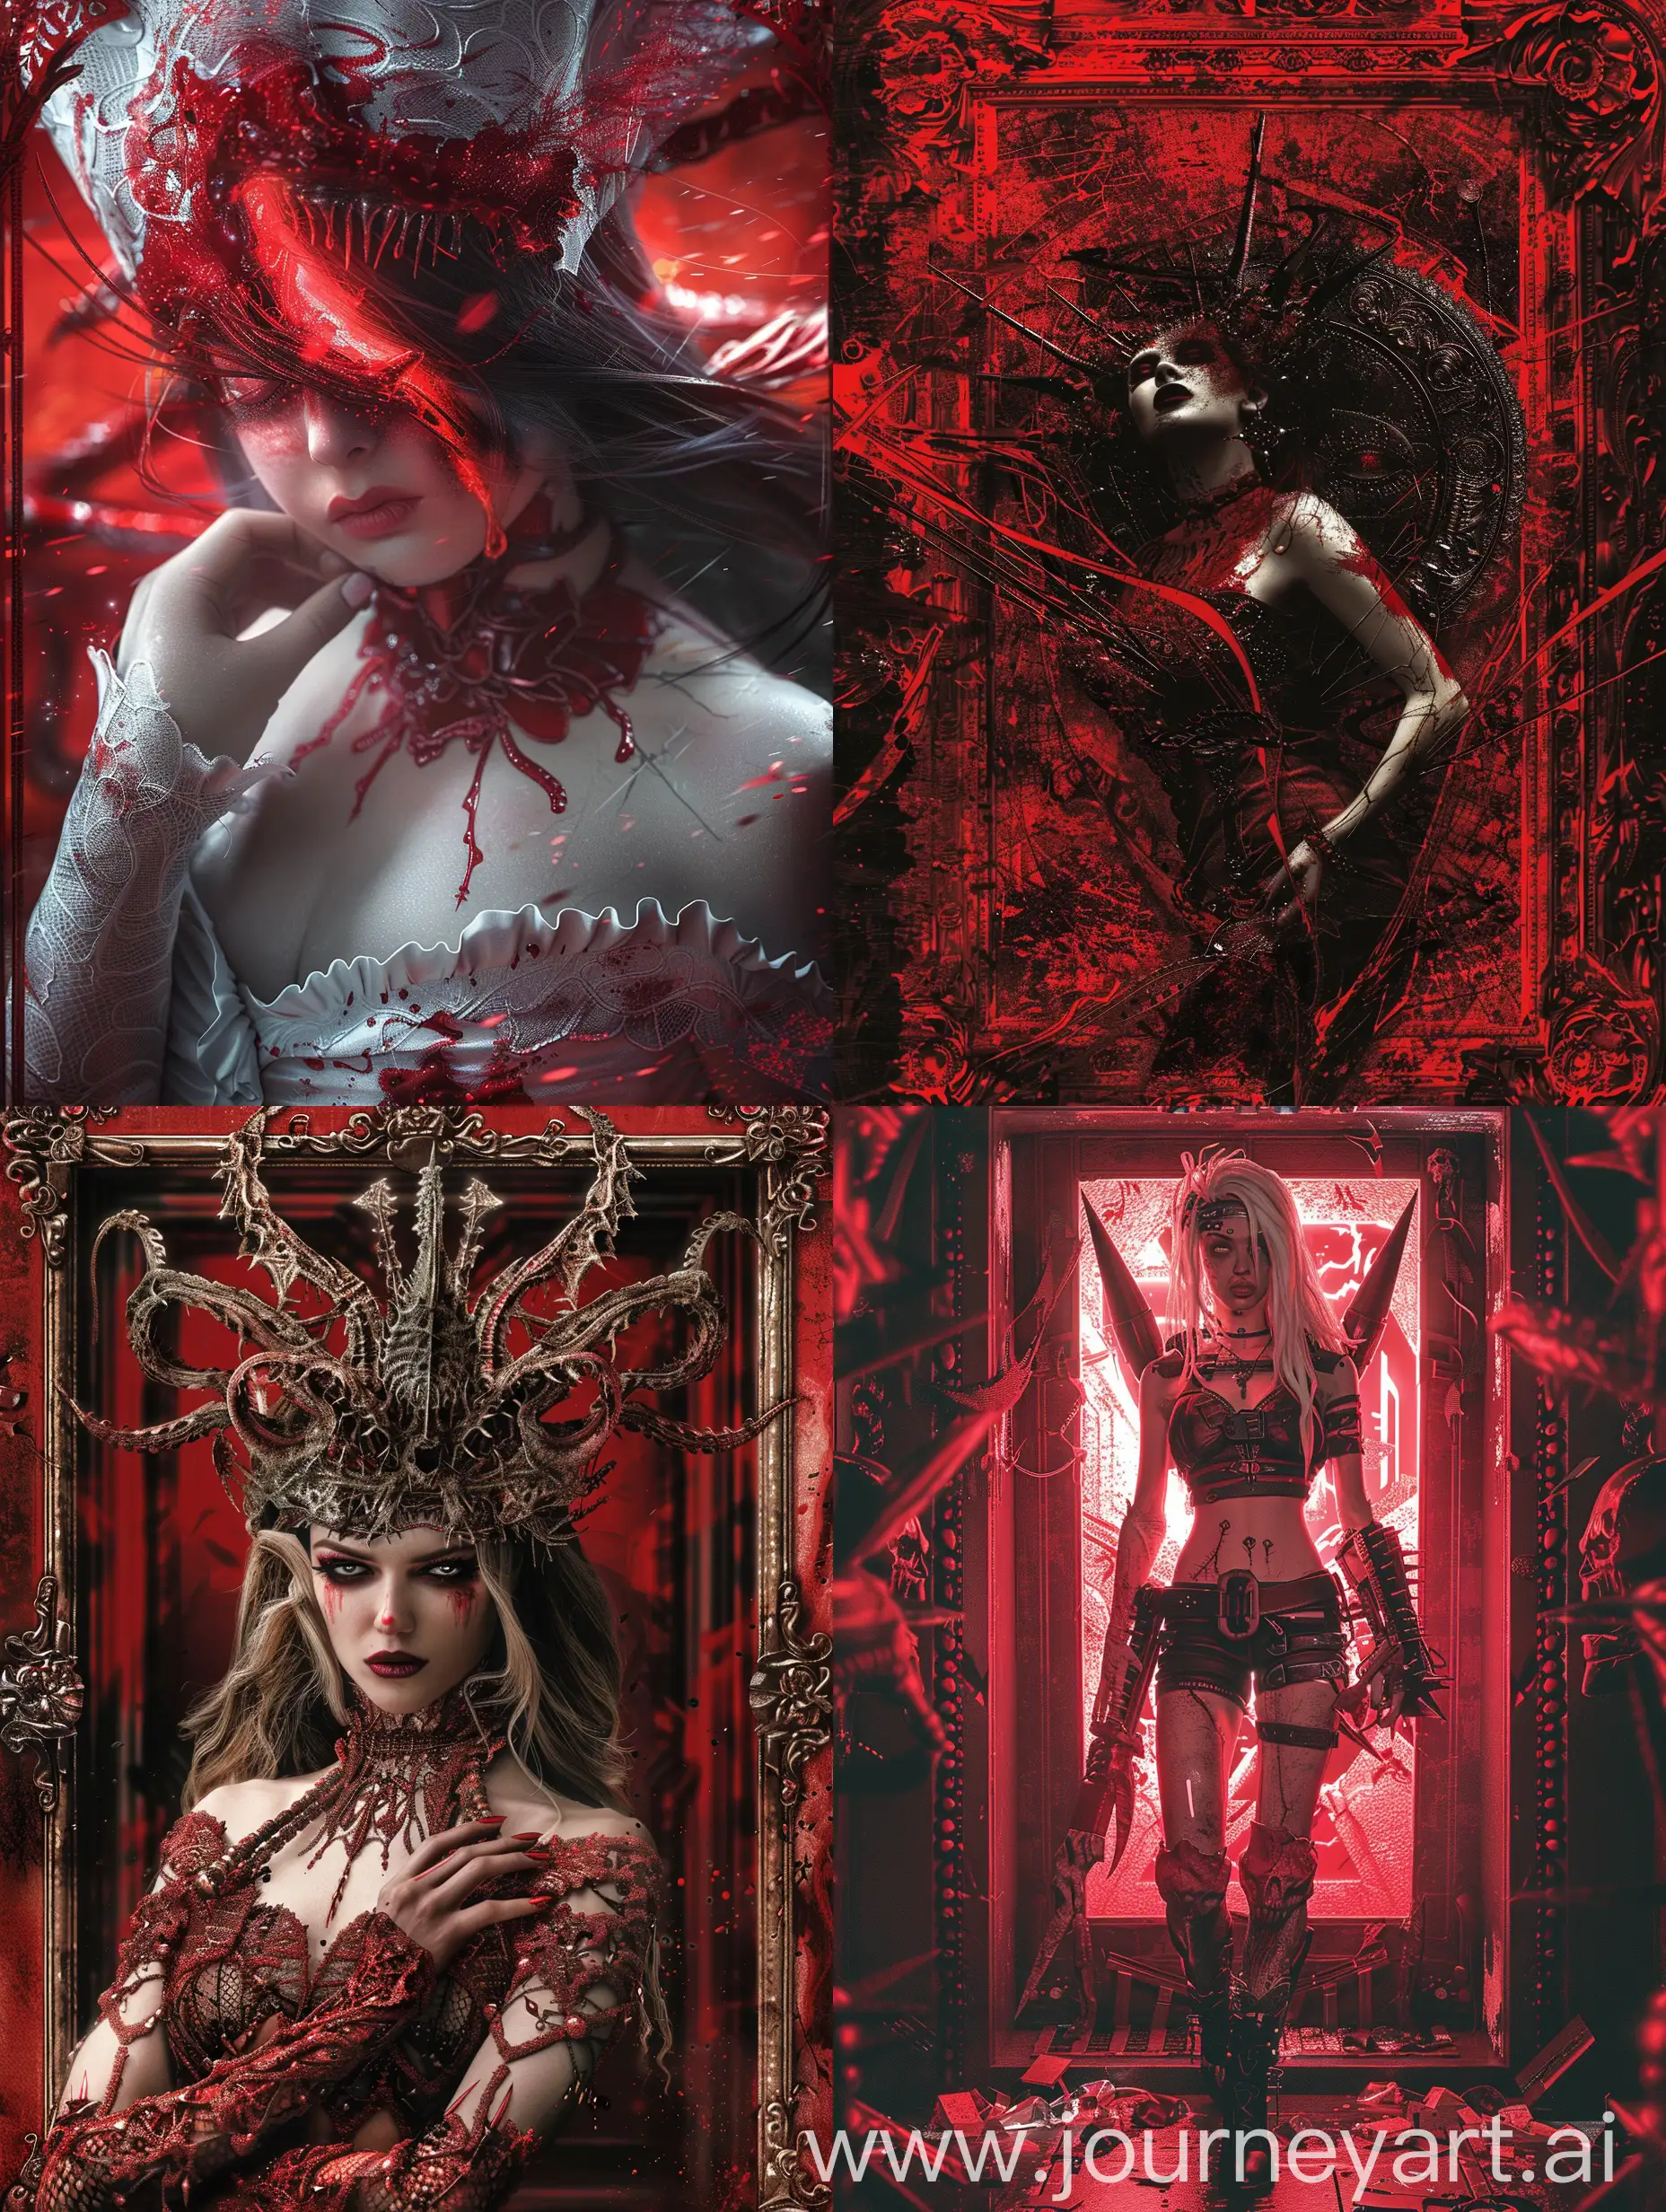 Ethereal-Cosmic-Horror-Goddess-Framed-in-Red-Surreal-Par-Olofsson-Style-Art